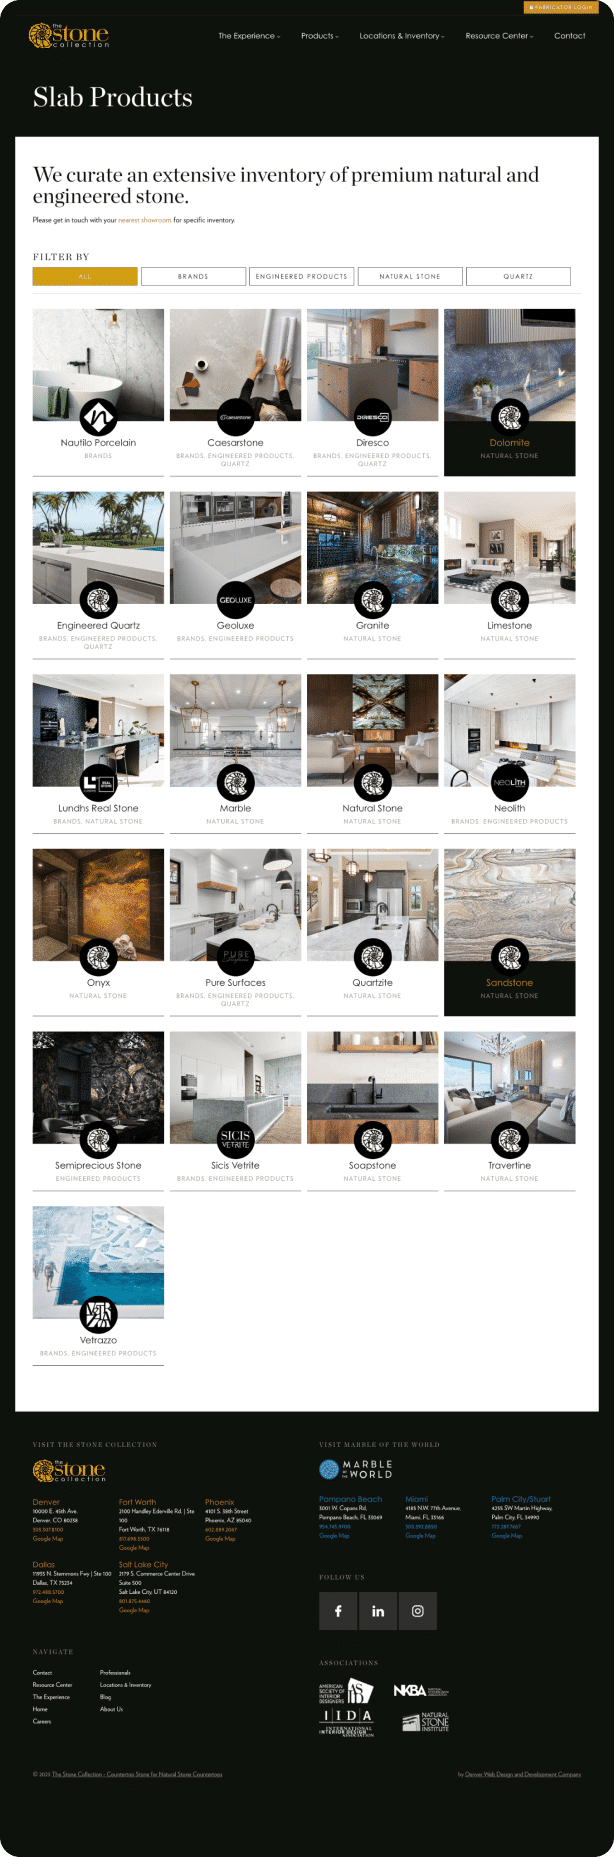 The Stone Collection Website Design and Development by Webolutions Digital Marketing Agency Denver, Colorado